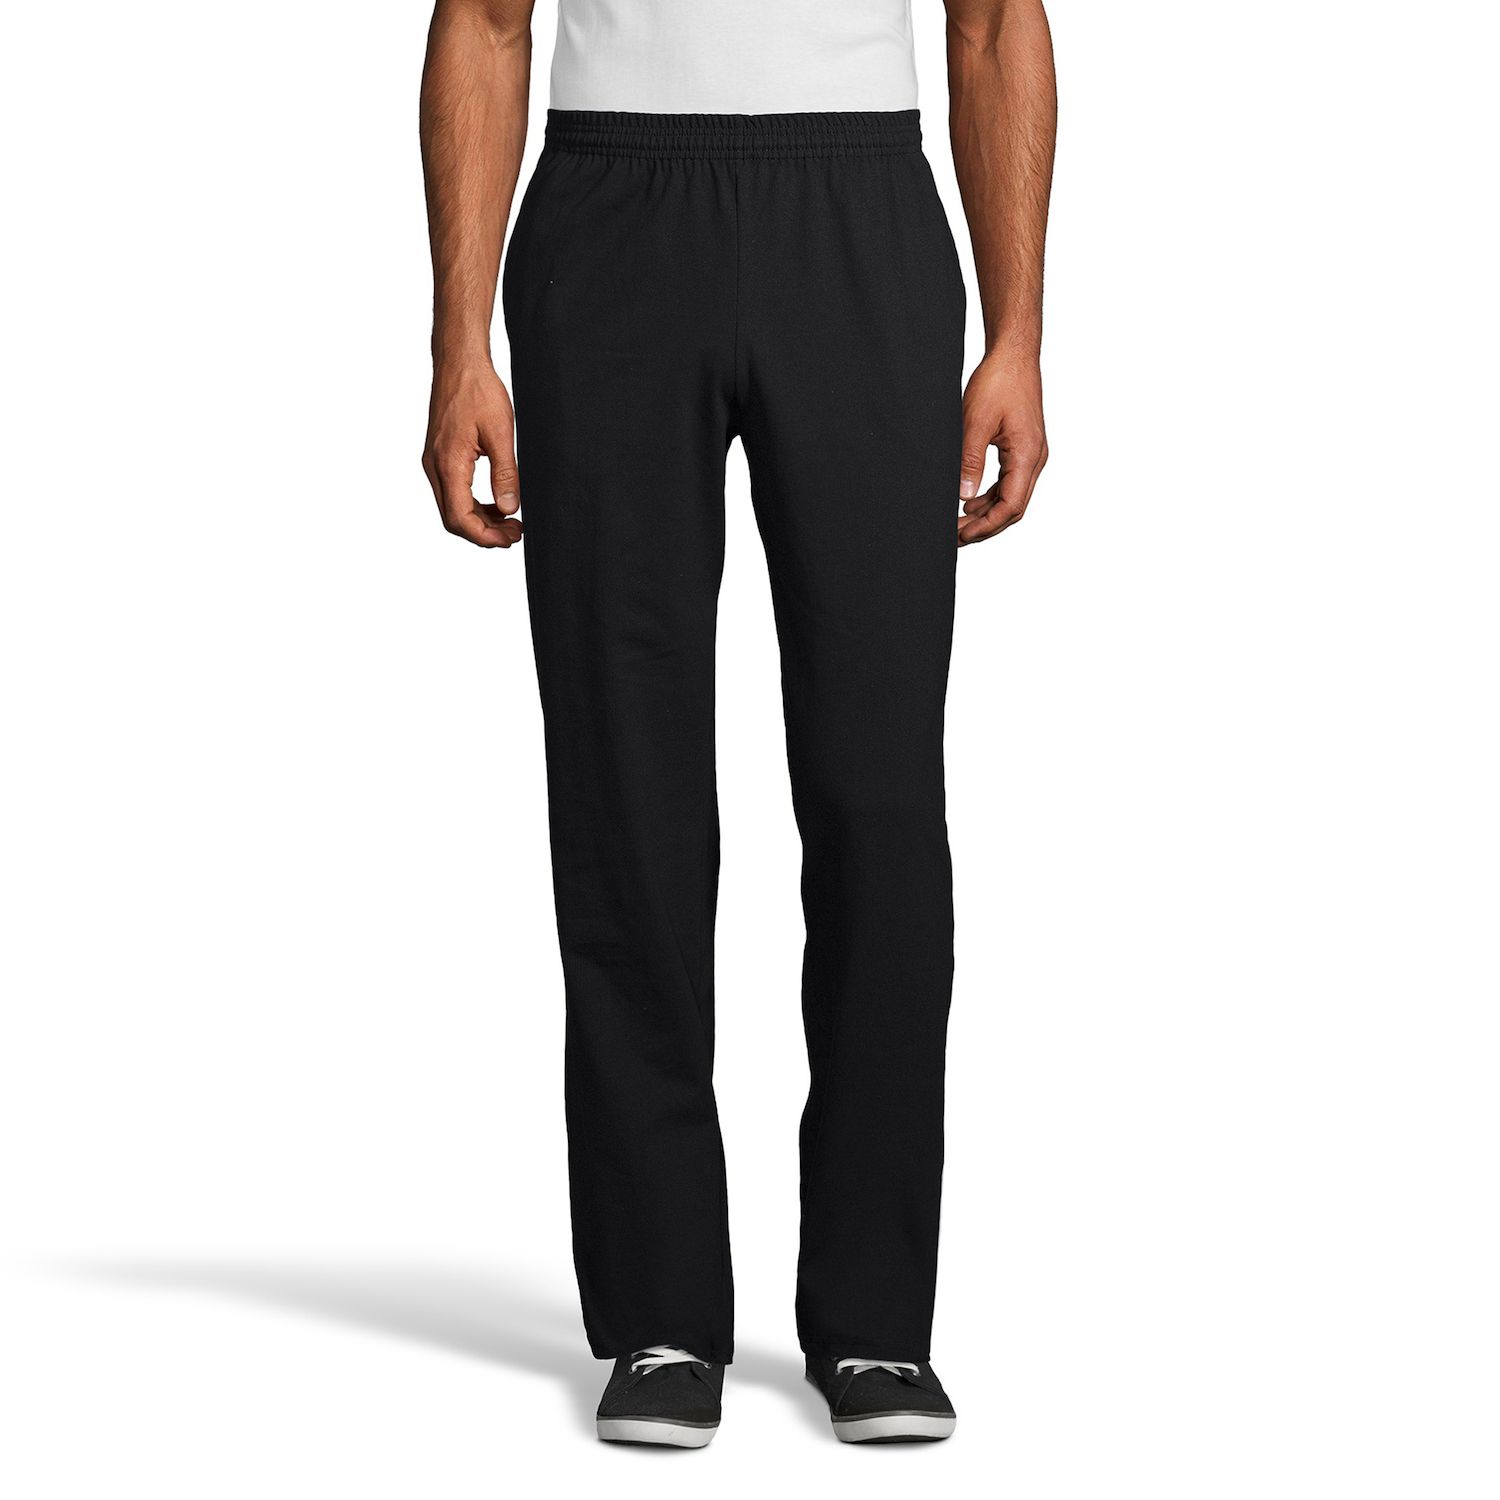 Image for Hanes Men's ComfortSoft Jersey Pocket Pants at Kohl's.